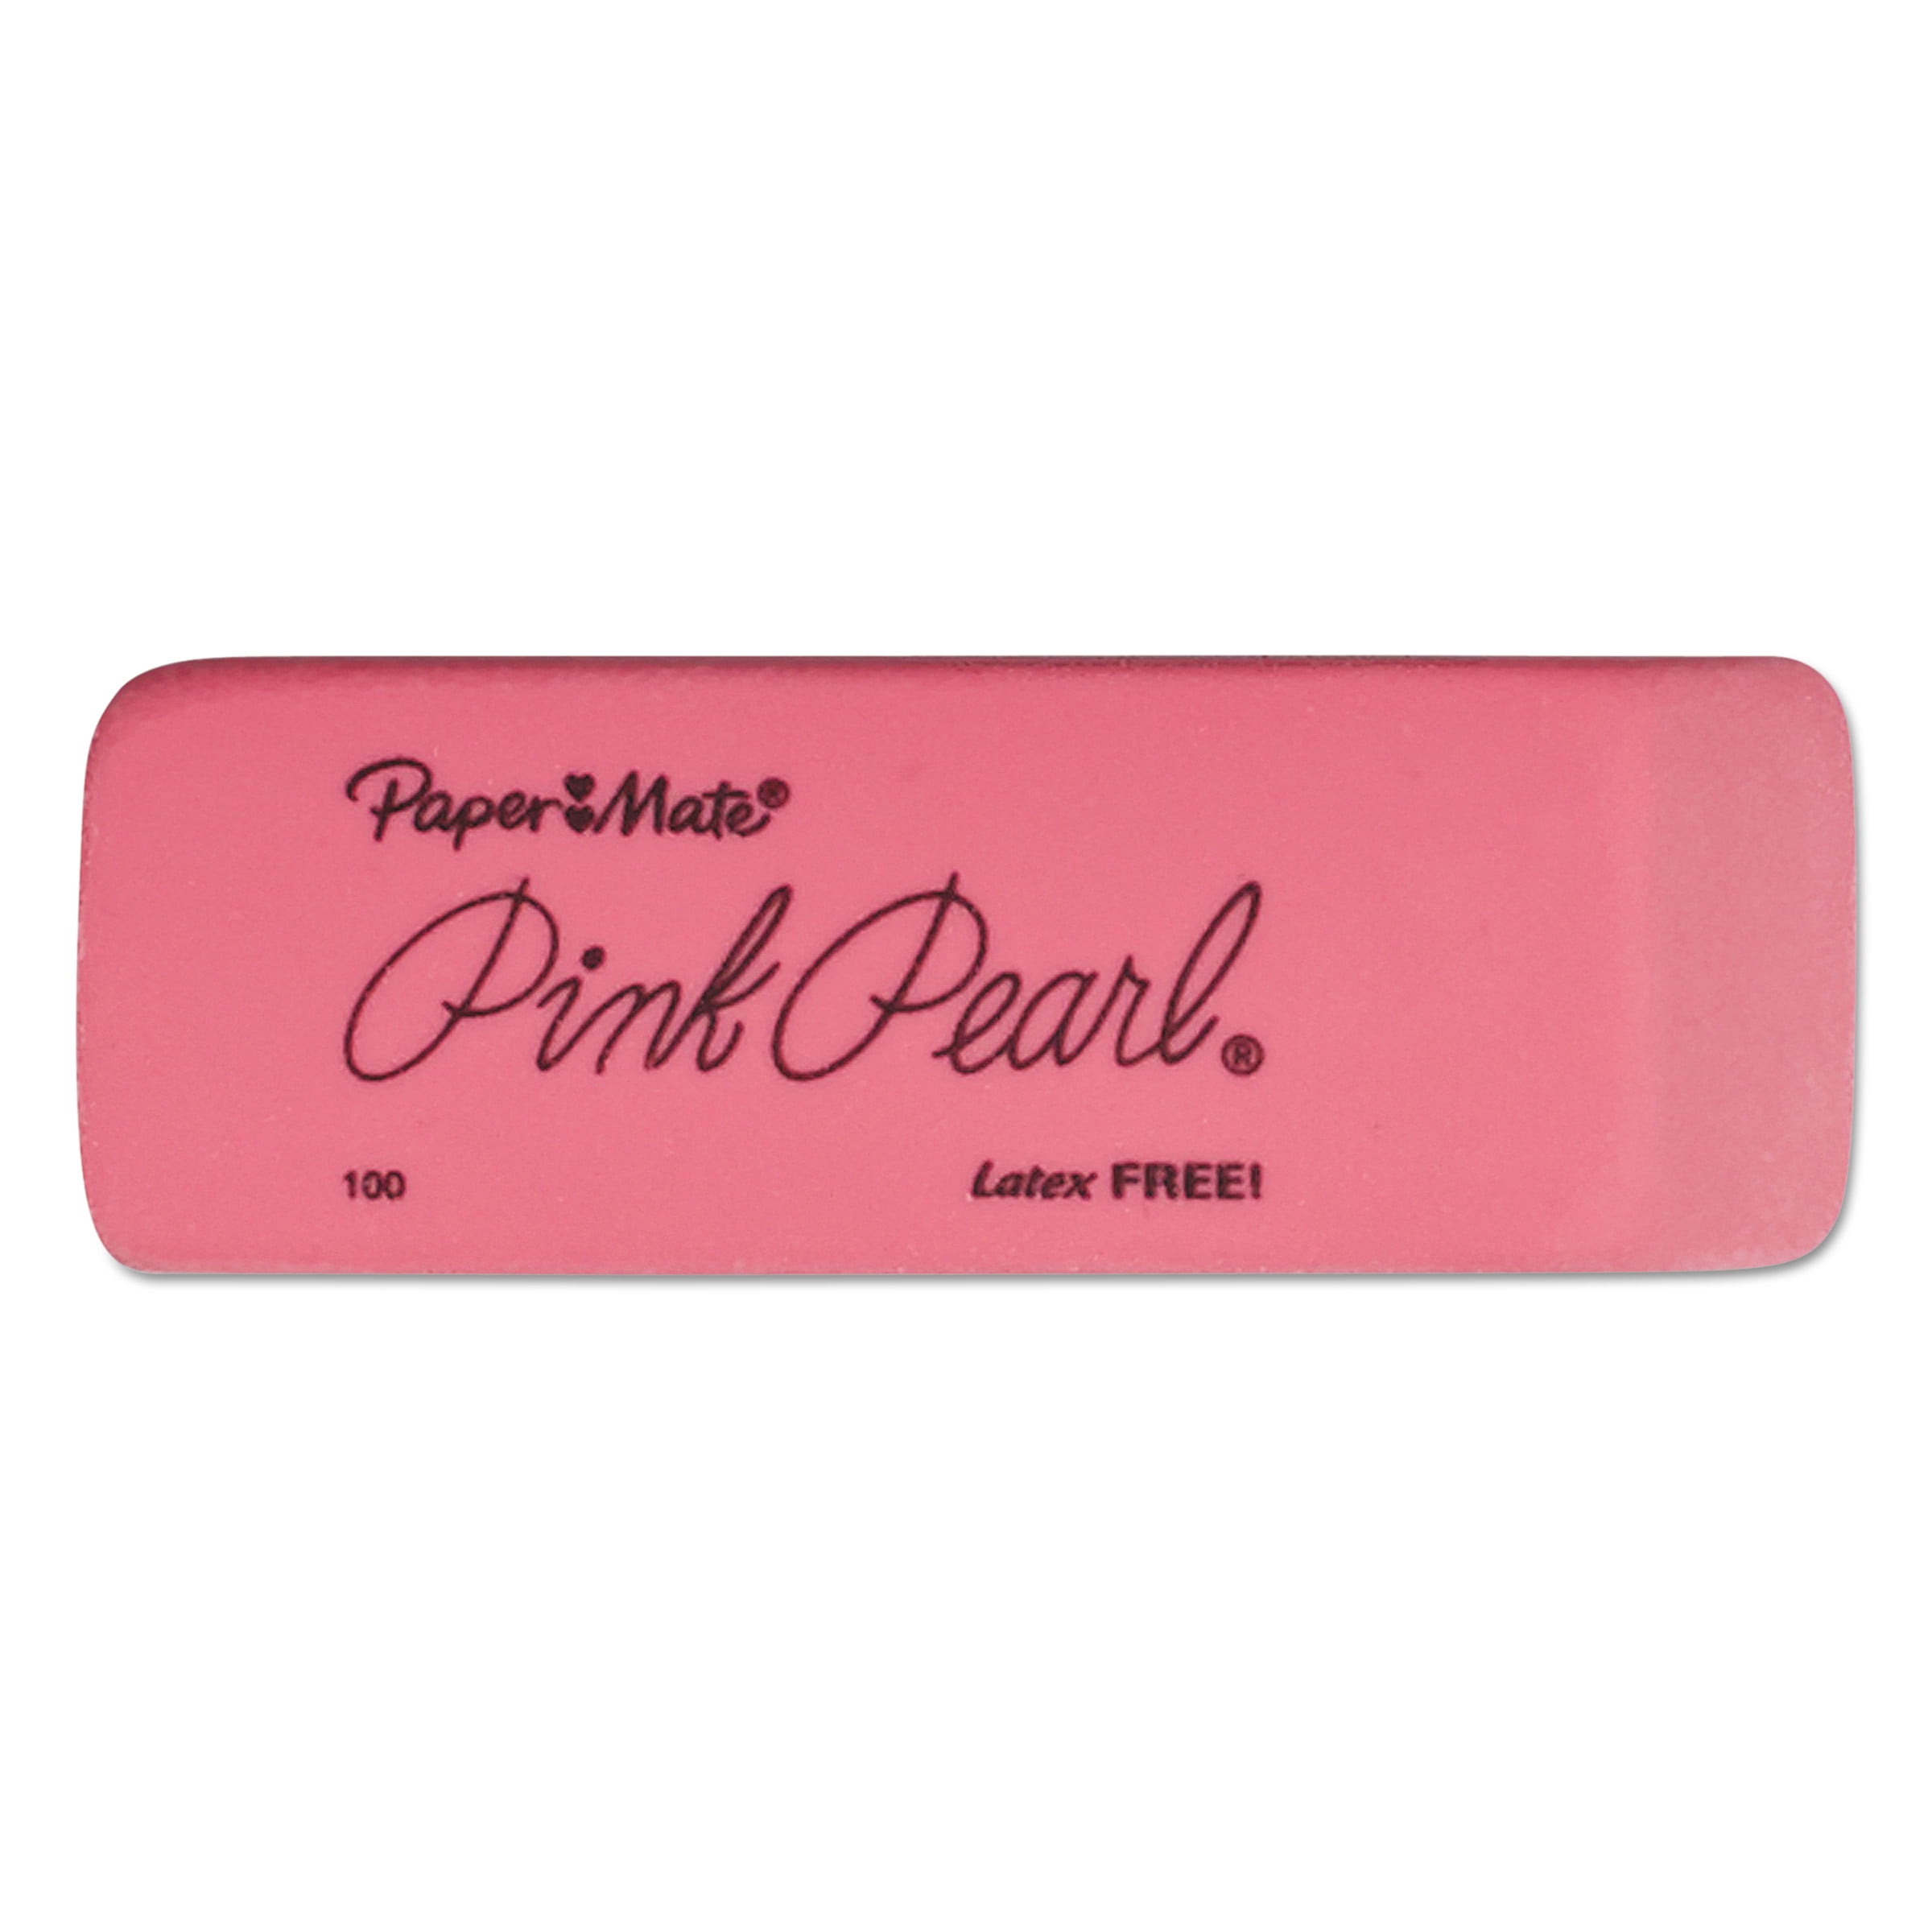 Medium Paper Mate Pink Pearl Erasers 24 Count 